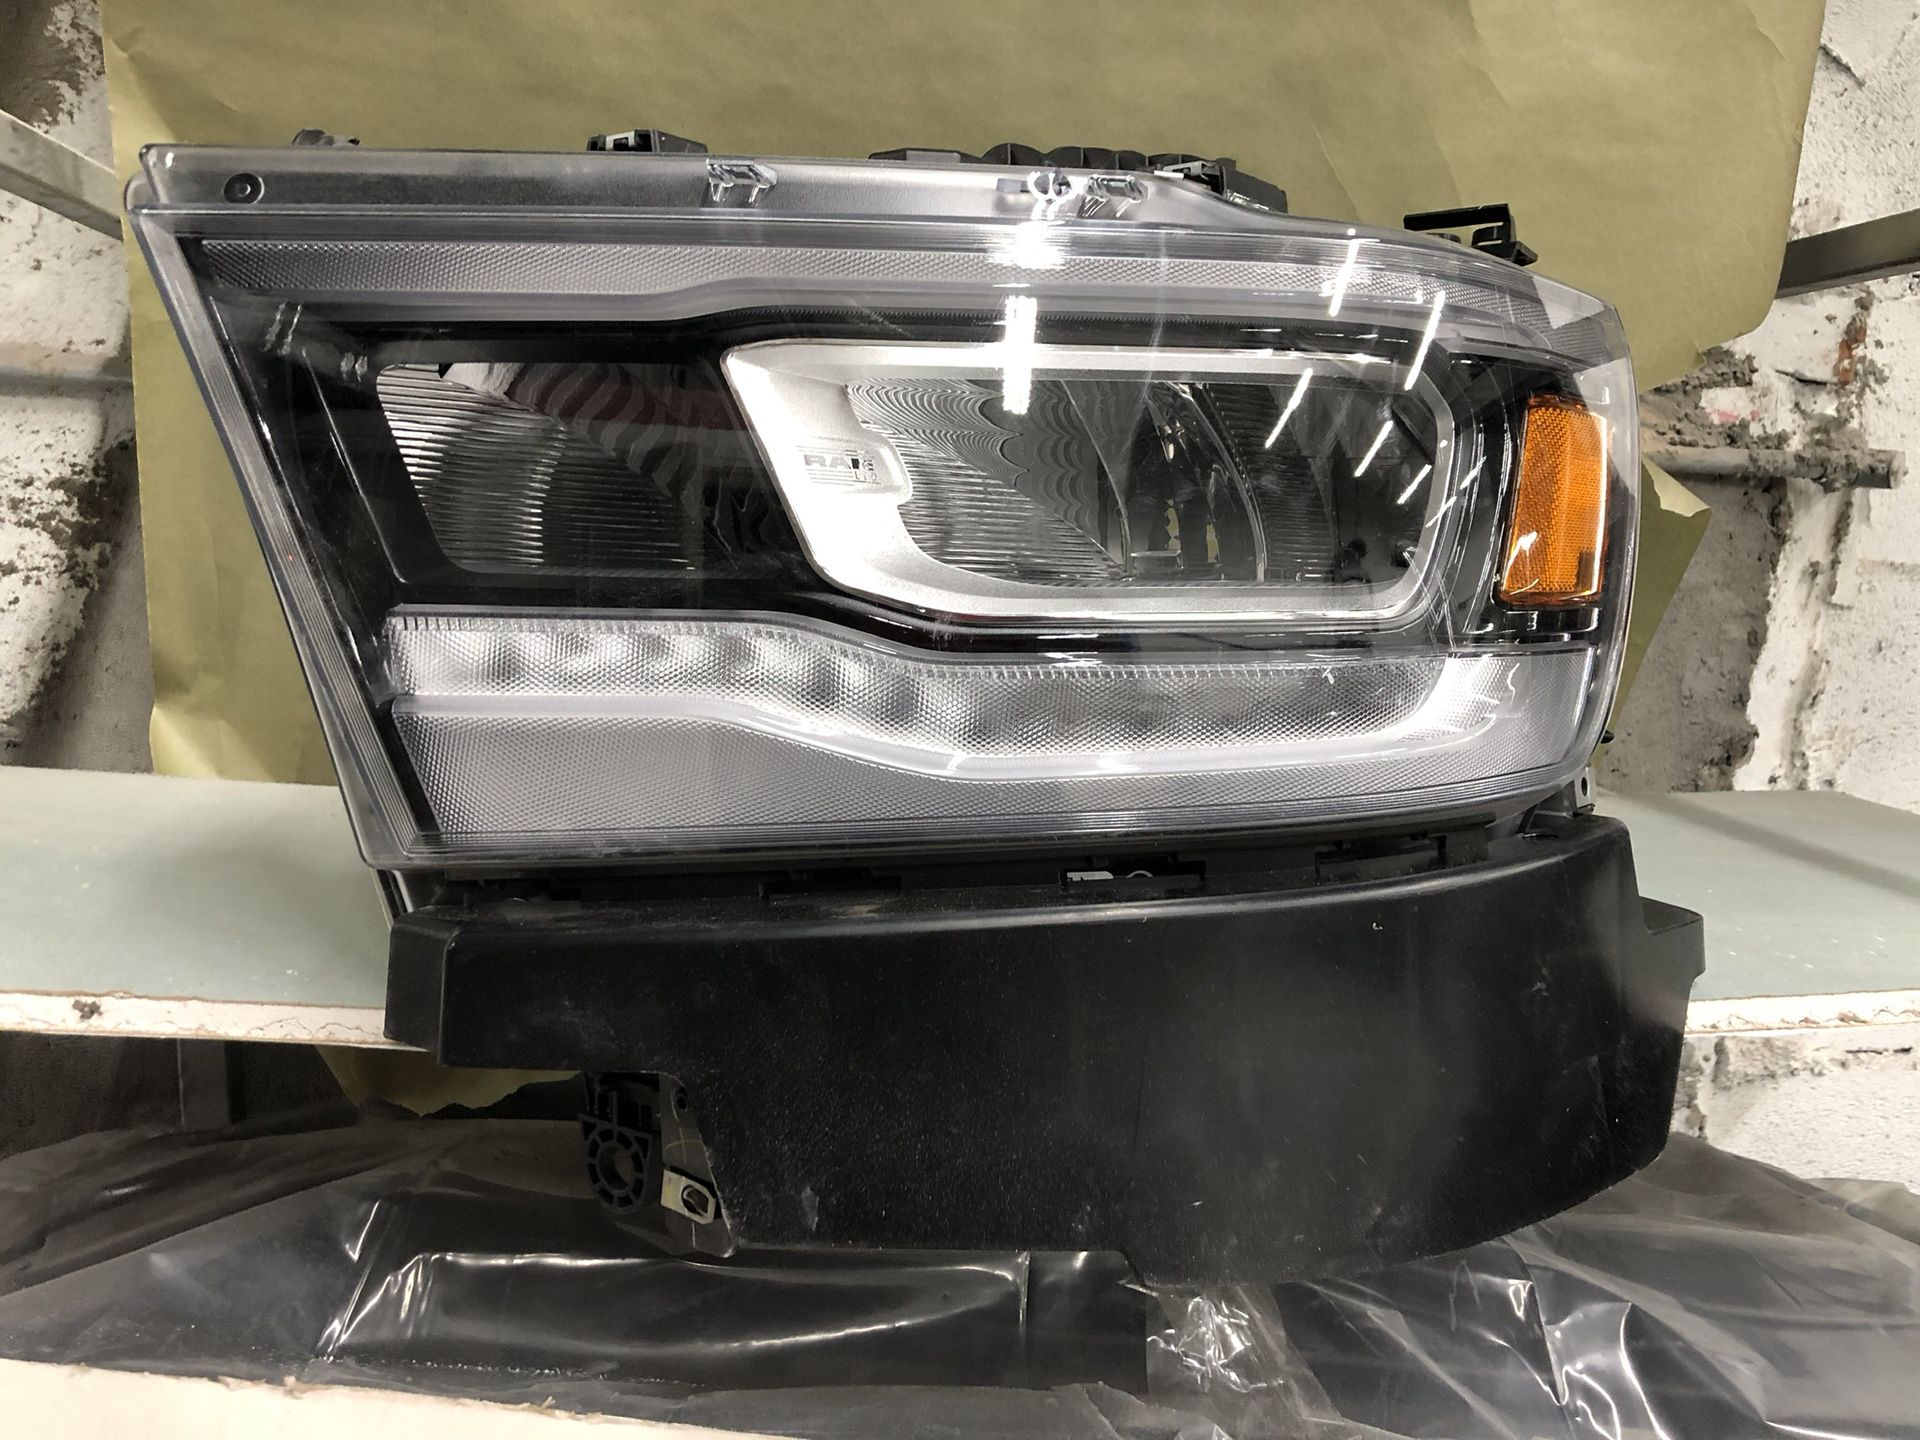 2019 Dodge Ram 1500 headlight led